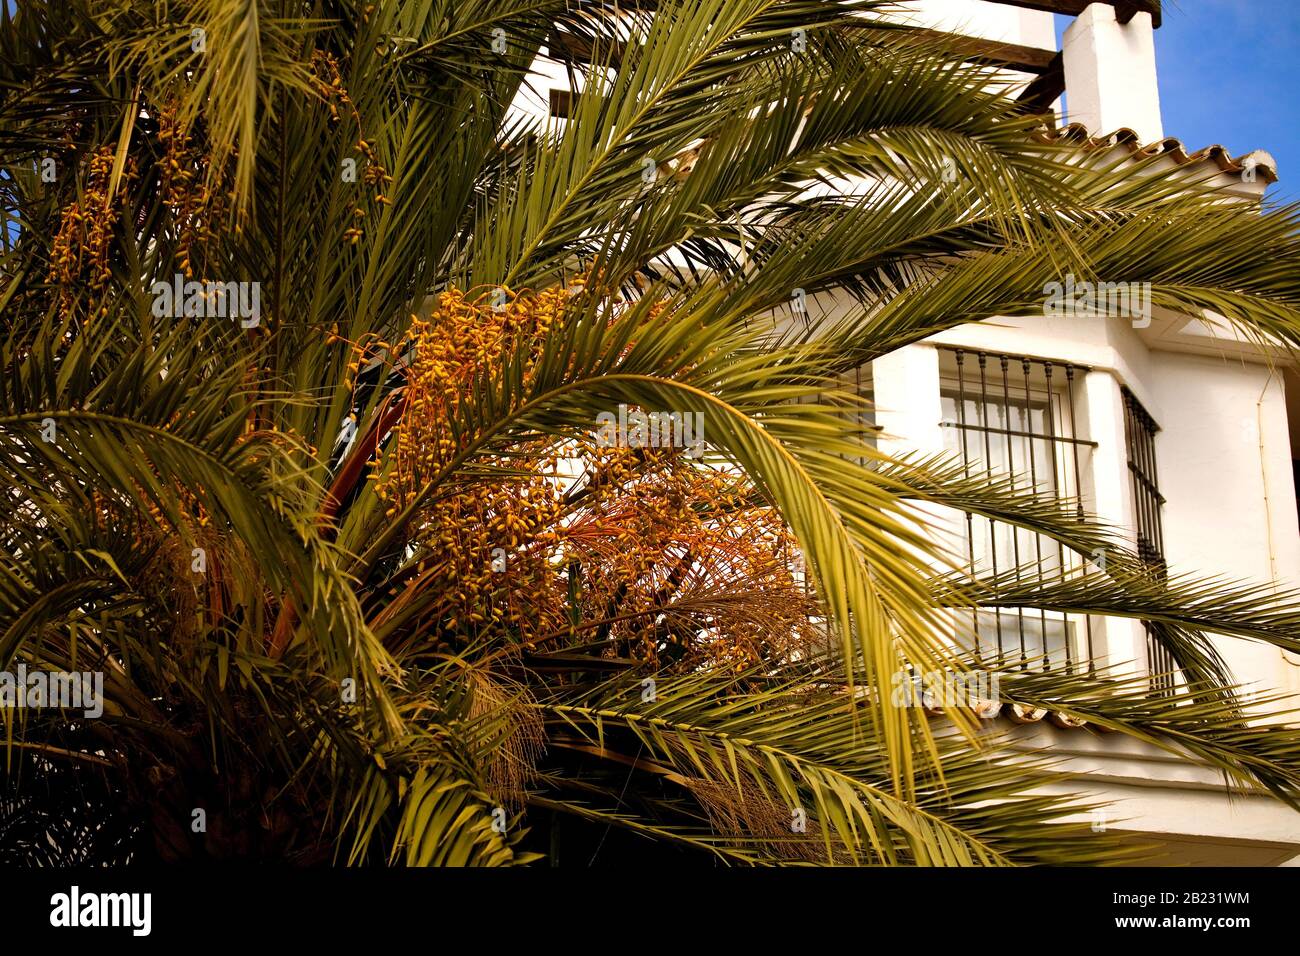 Mediterranean holiday villa with palm trees Stock Photo